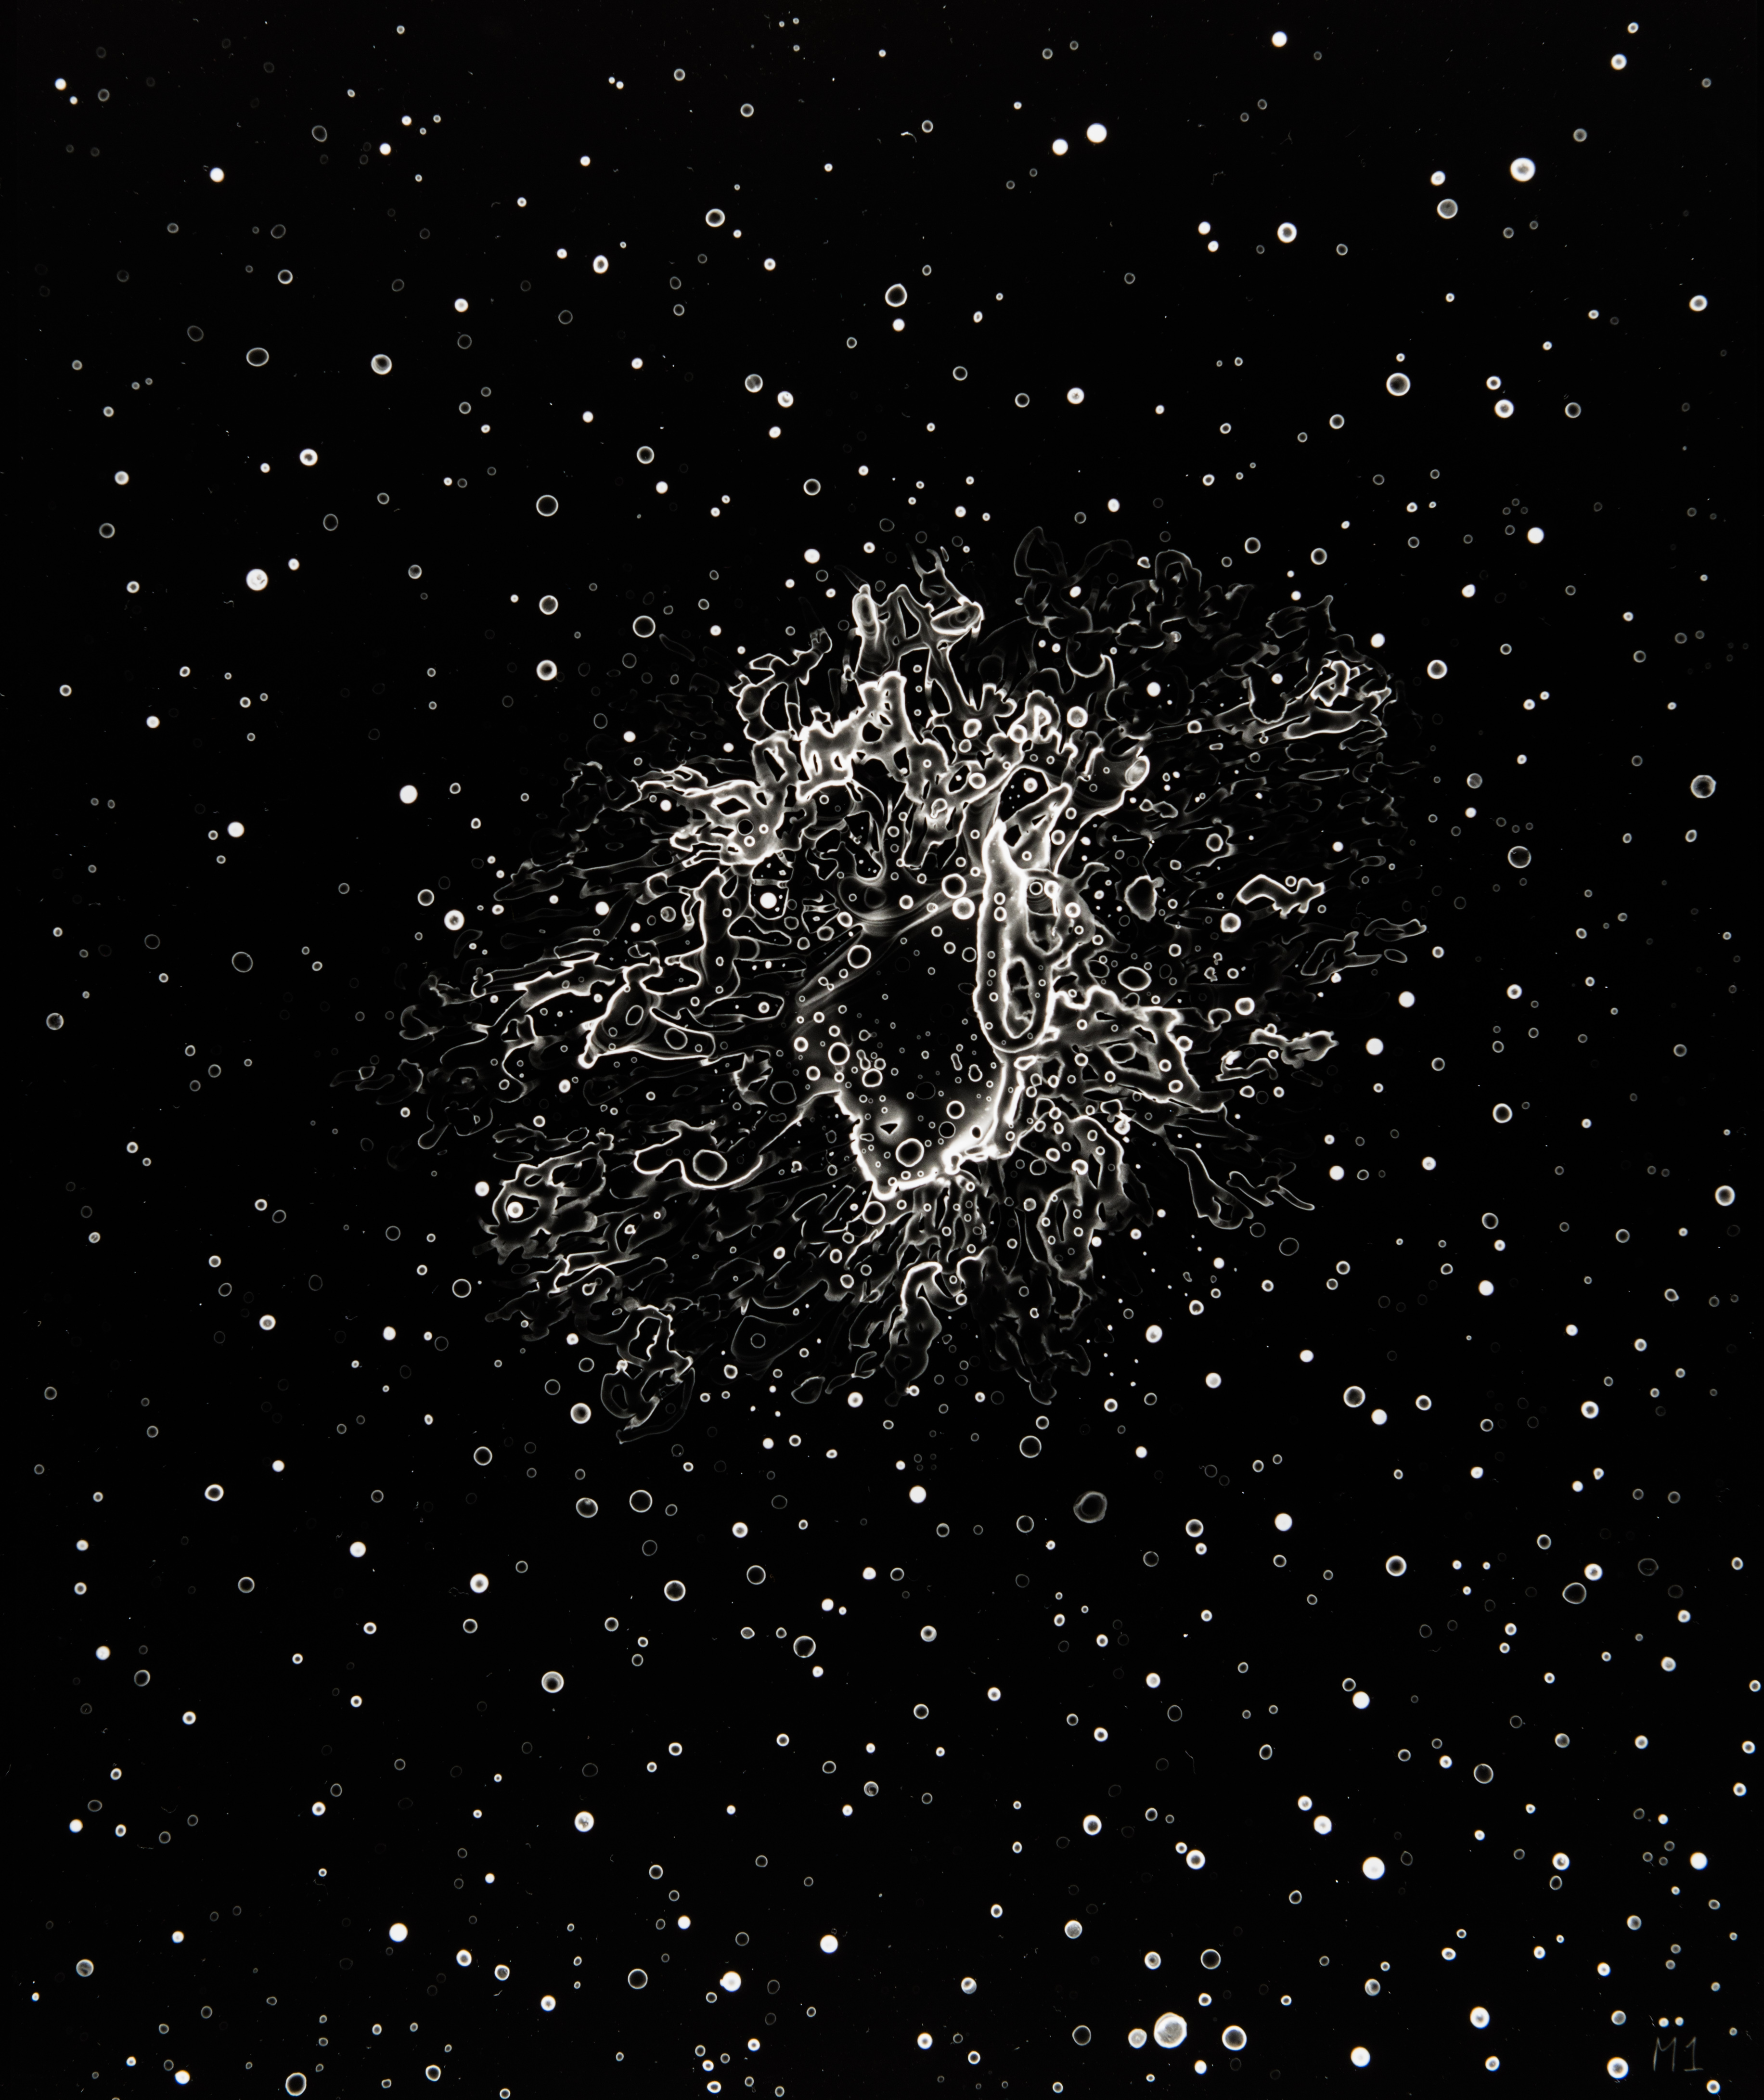 Print of M1 (Crab Nebula), from "Deep Sky Companion" by Lia Halloran. Credit: Lia Halloran